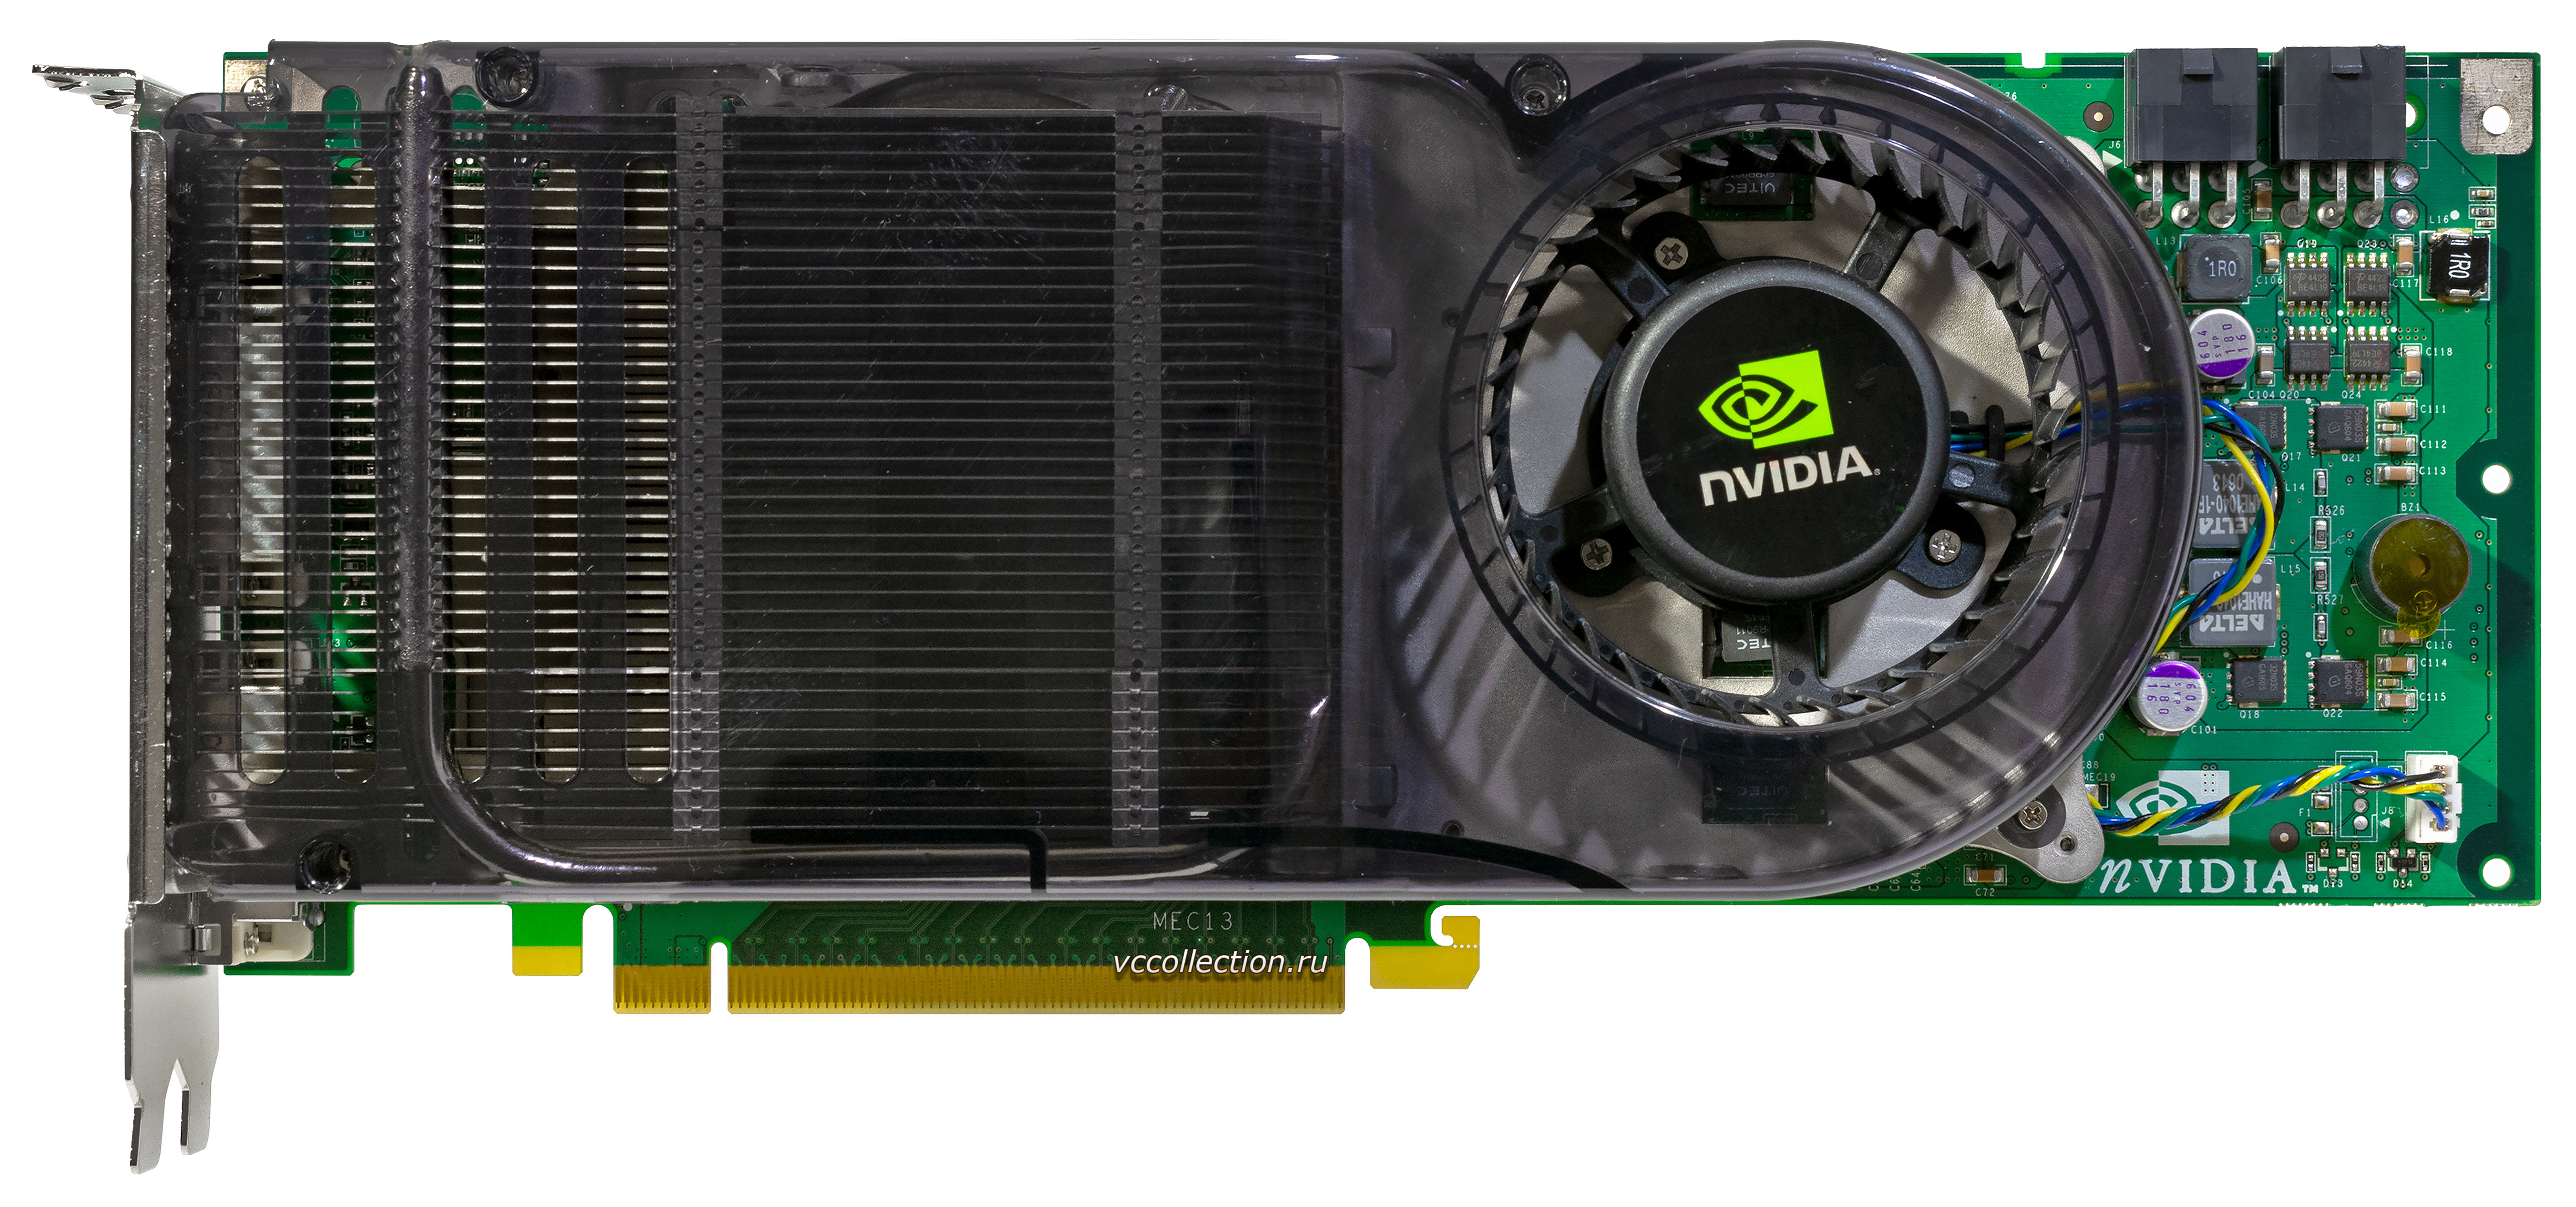 NVidia GeForce 8800 GTX